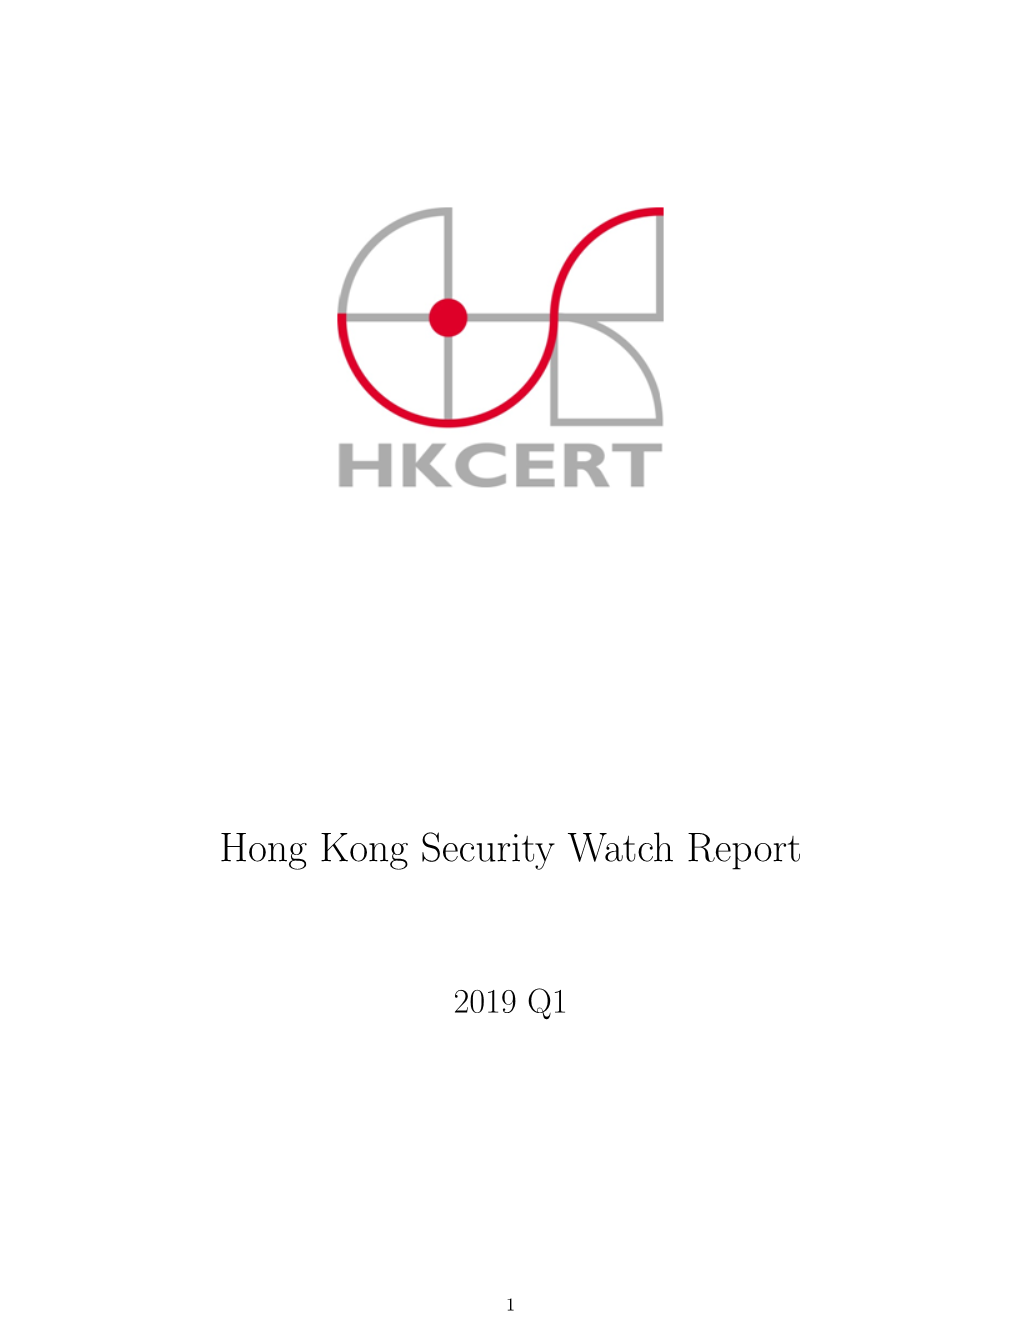 Download Hong Kong Security Watch Report